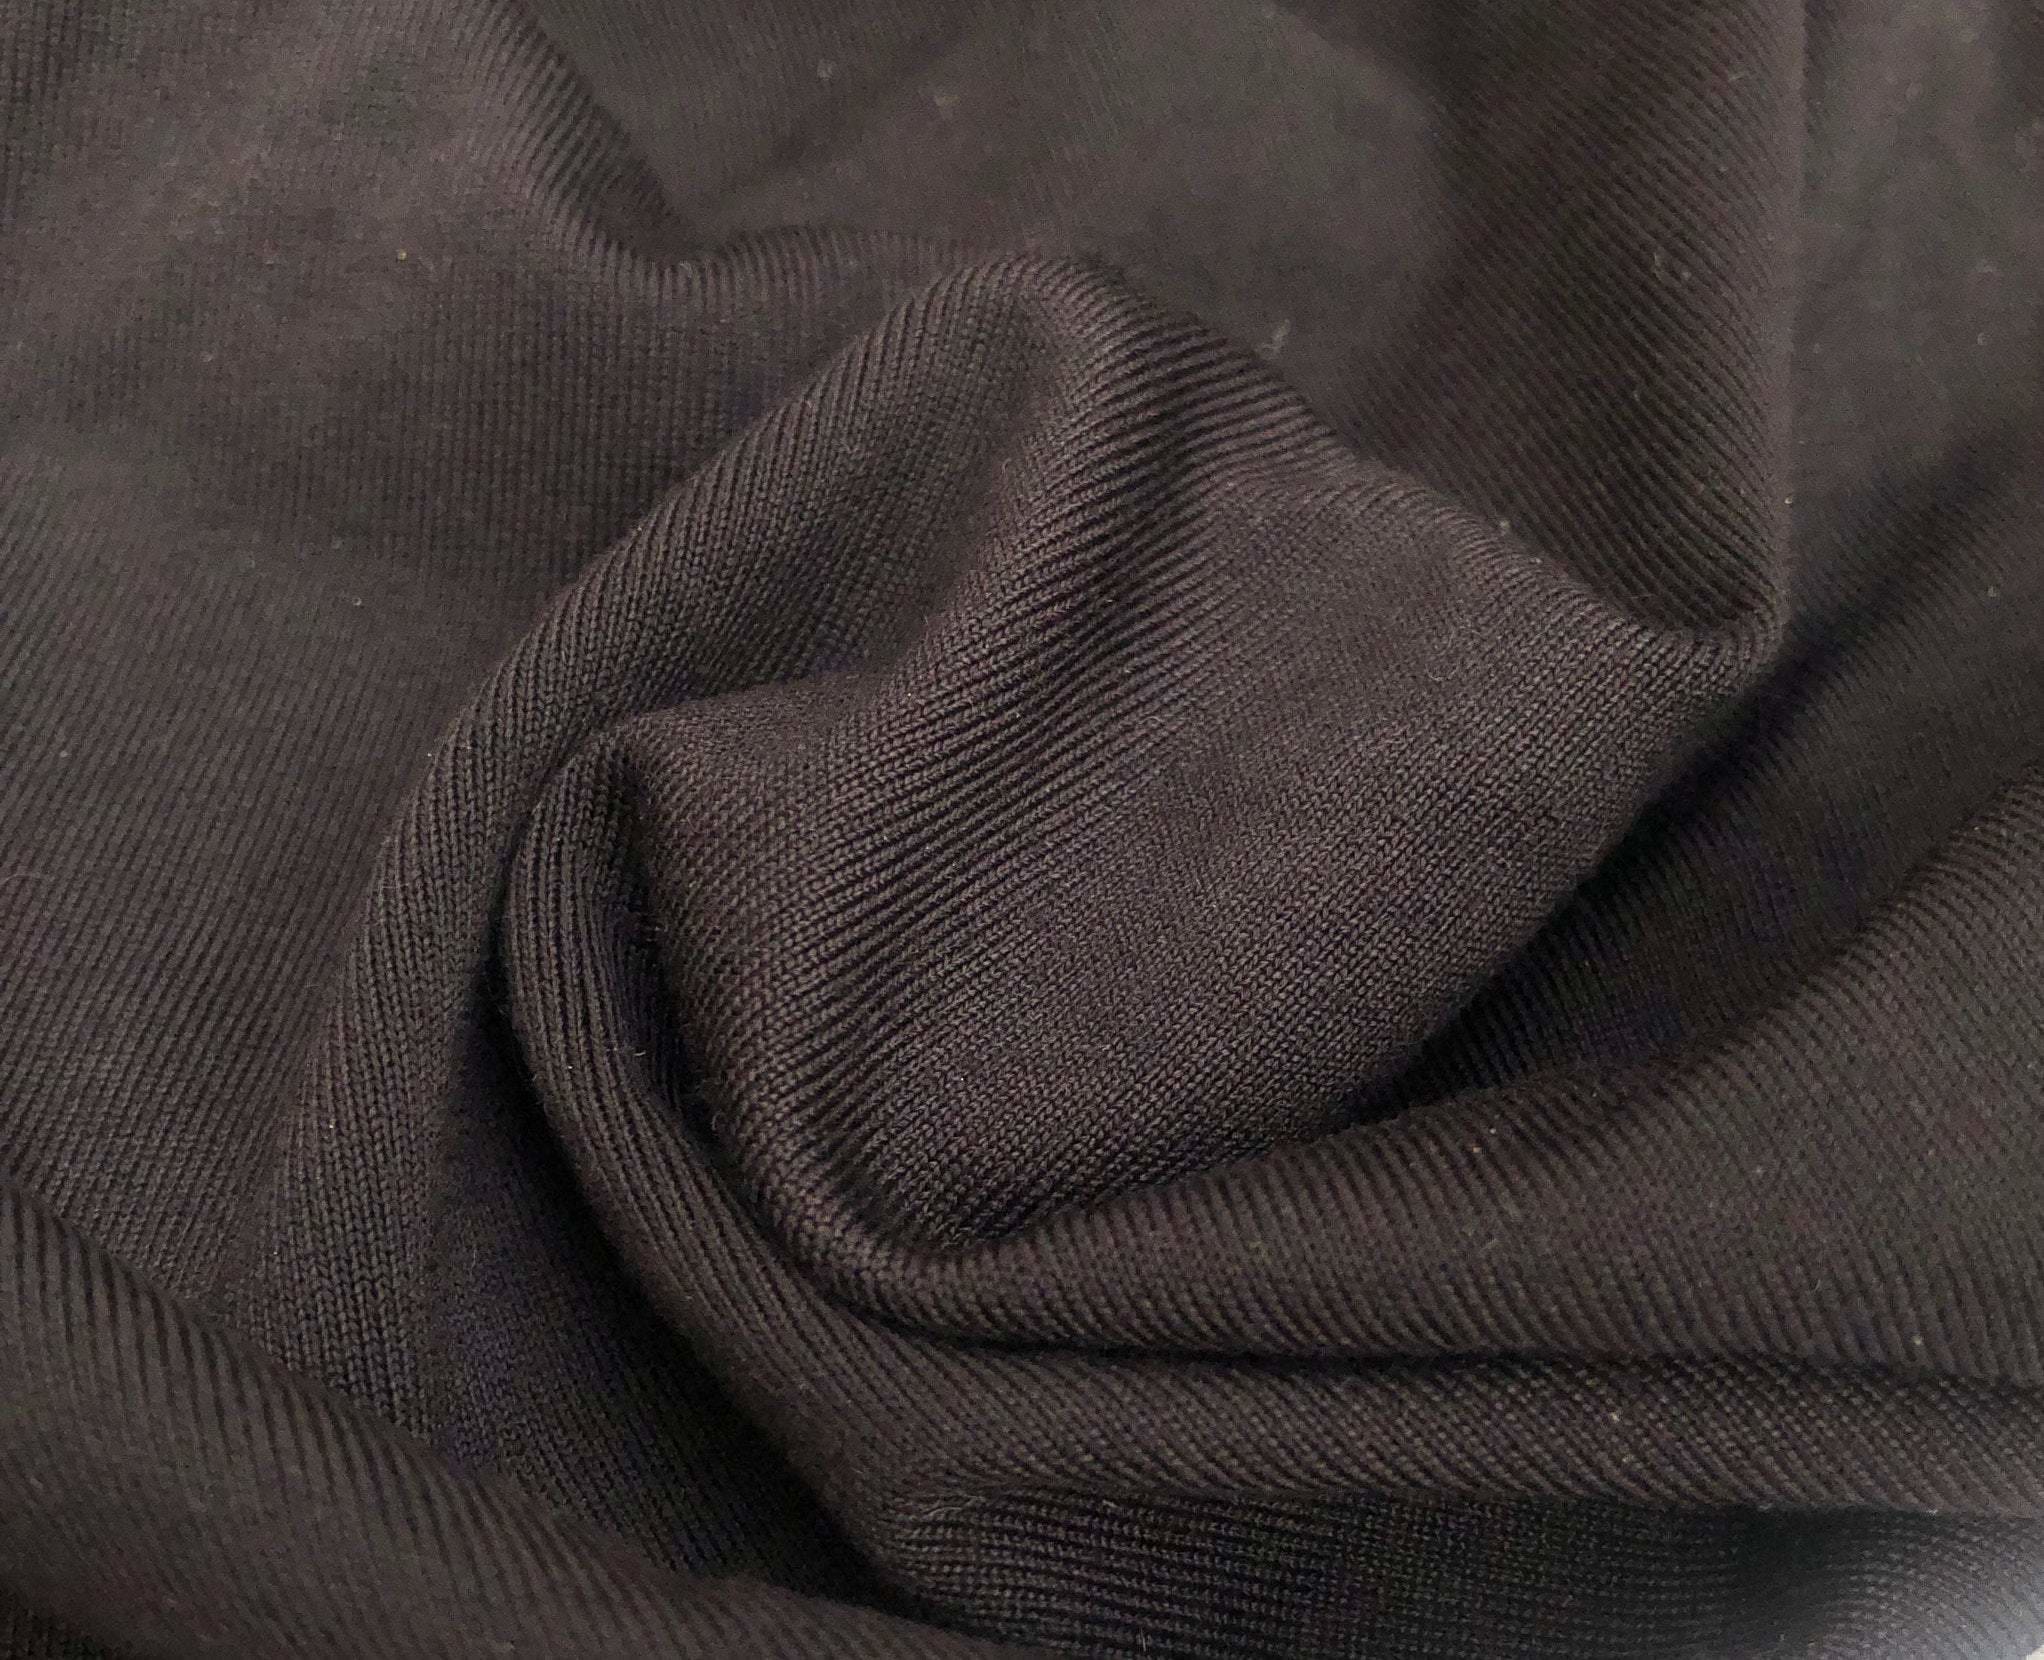 nylon fabric